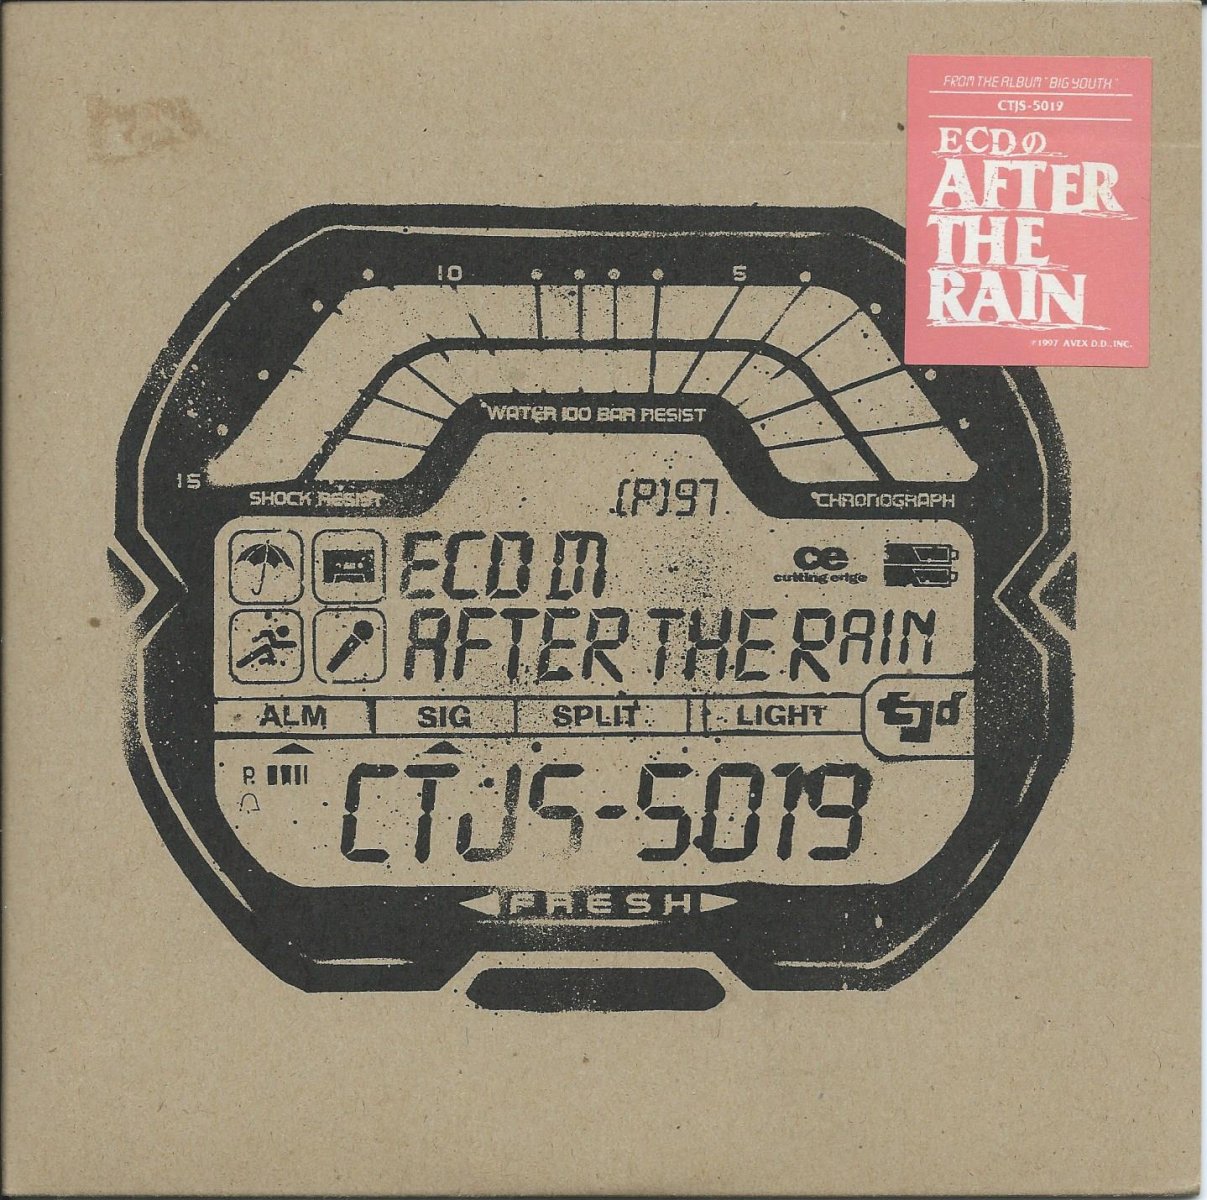 ECD / ECDAFTER THE RAIN (7